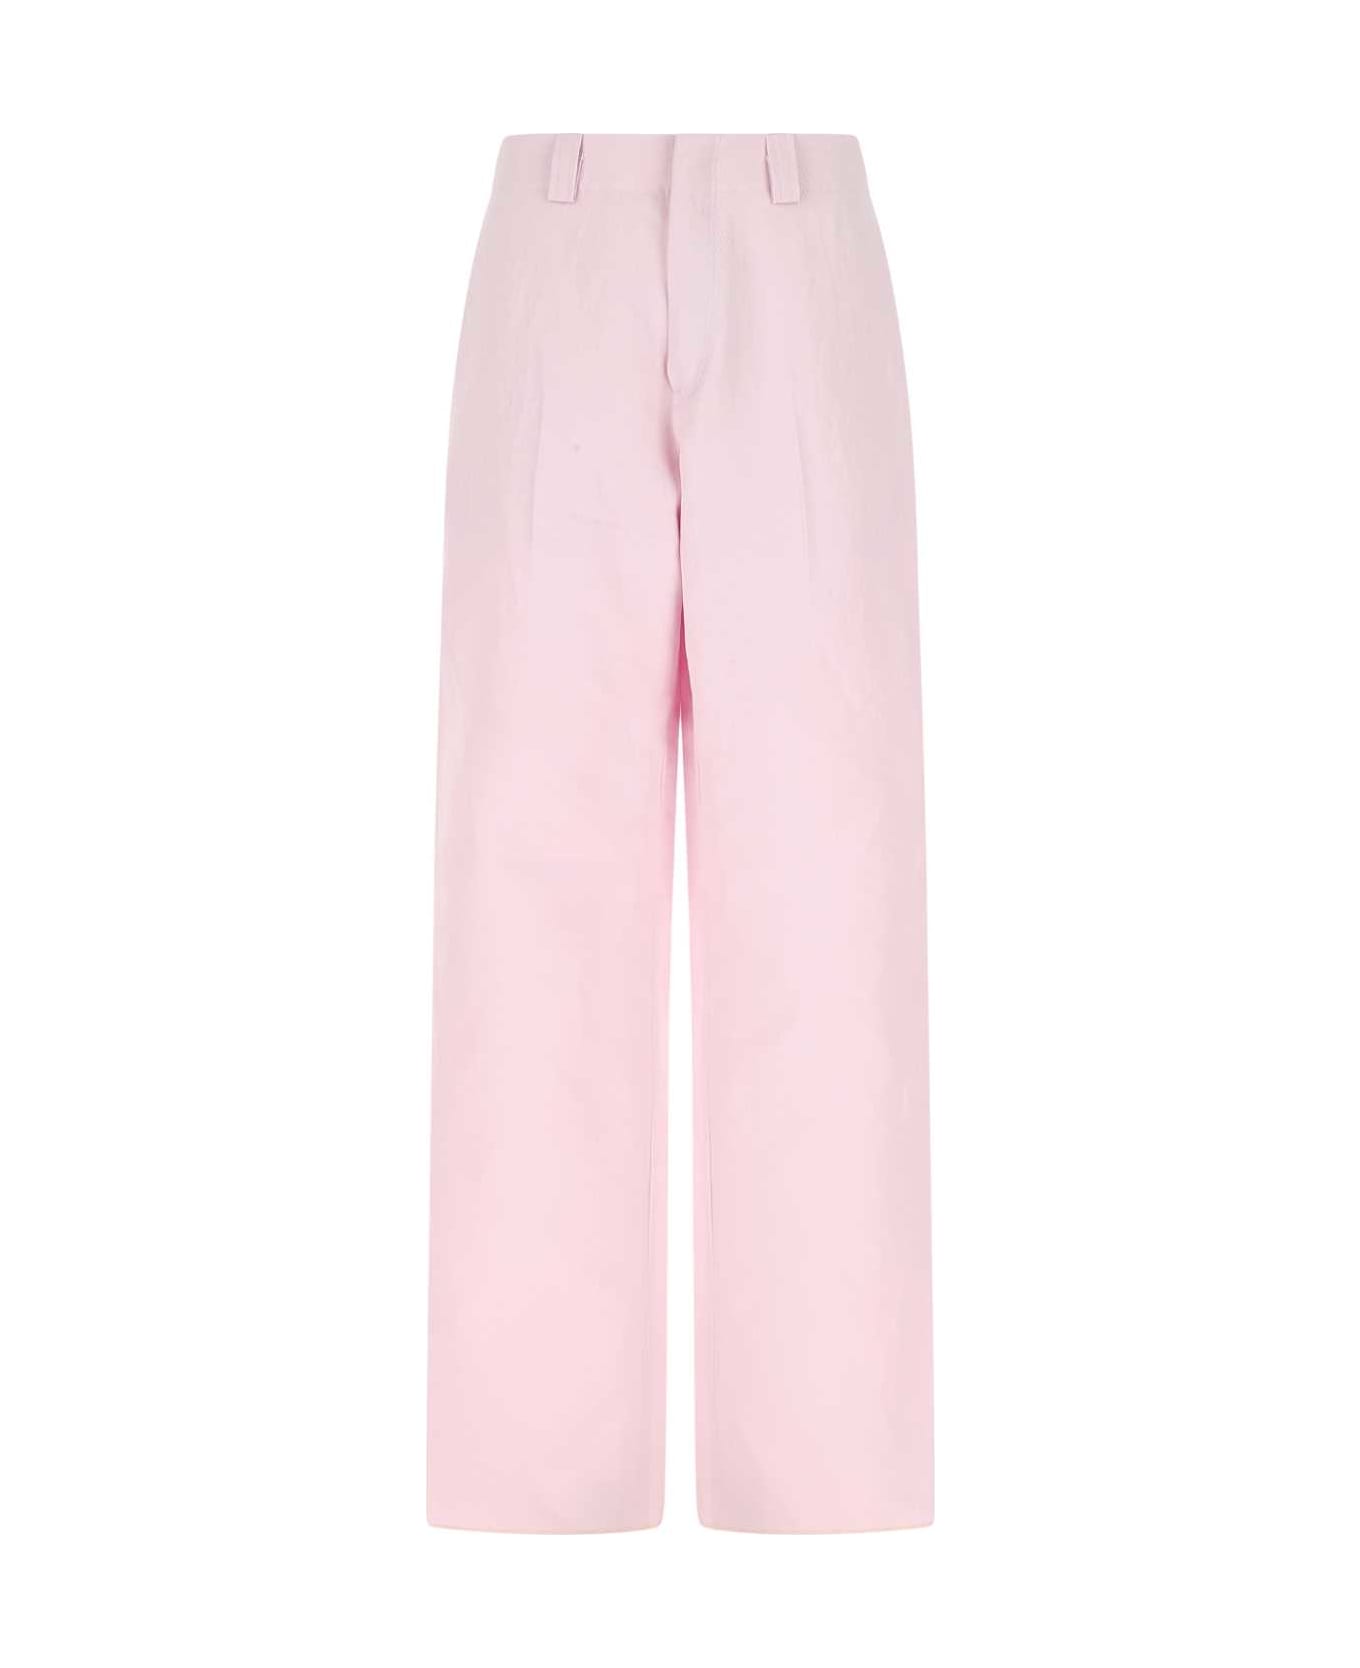 Zegna Pastel Pink Cotton Blend Wide-leg Pant - PINK